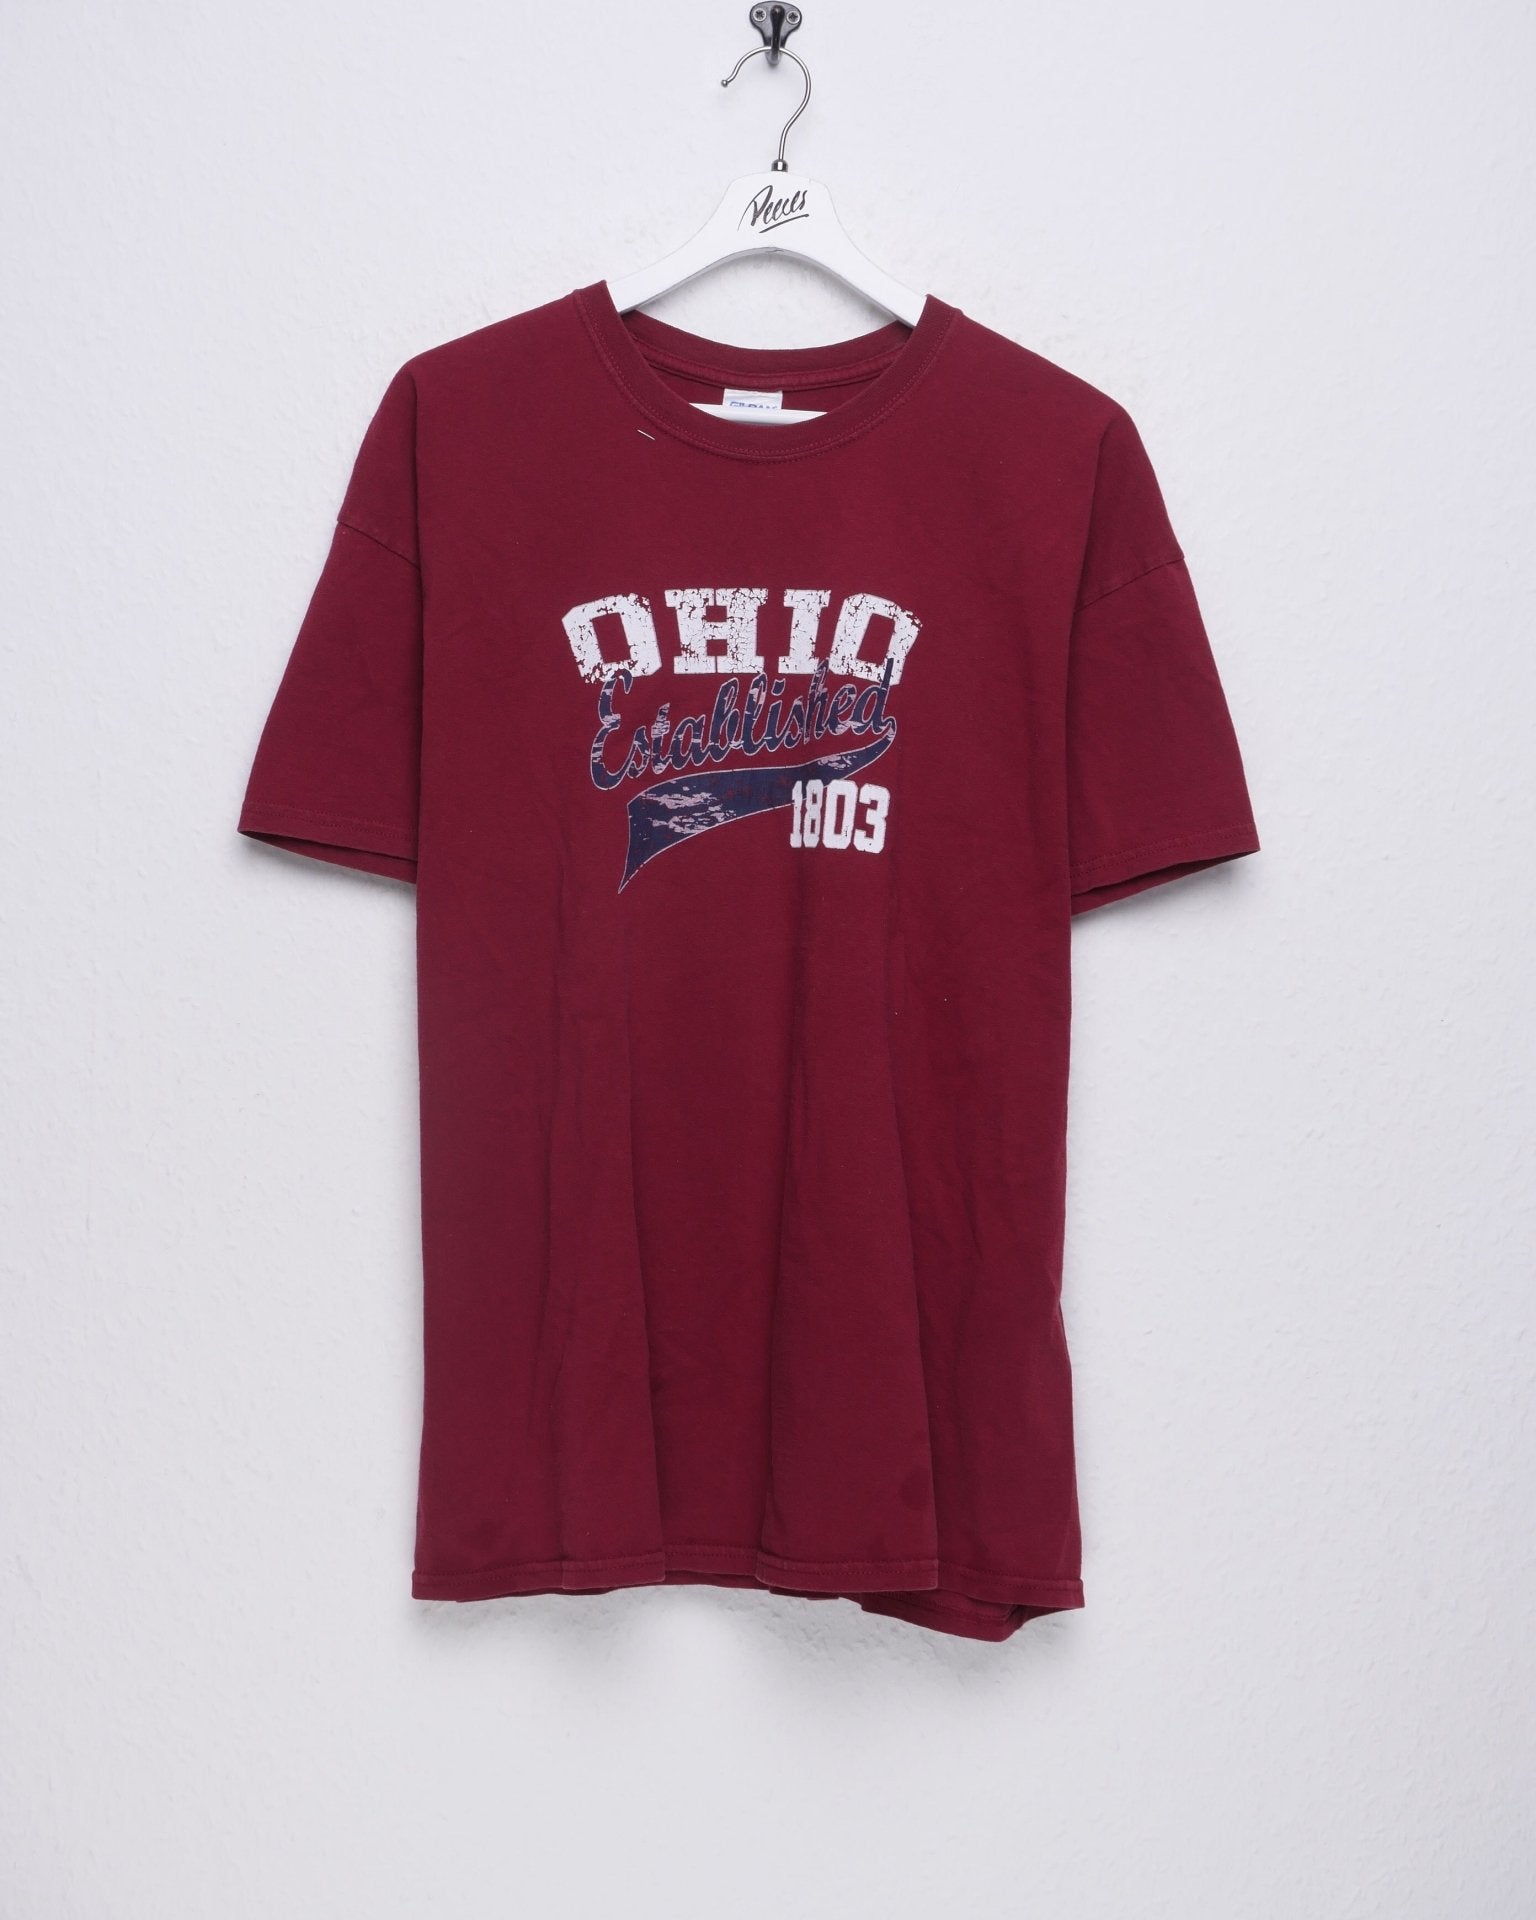 Ohio Spellout Vintage Shirt - Peeces